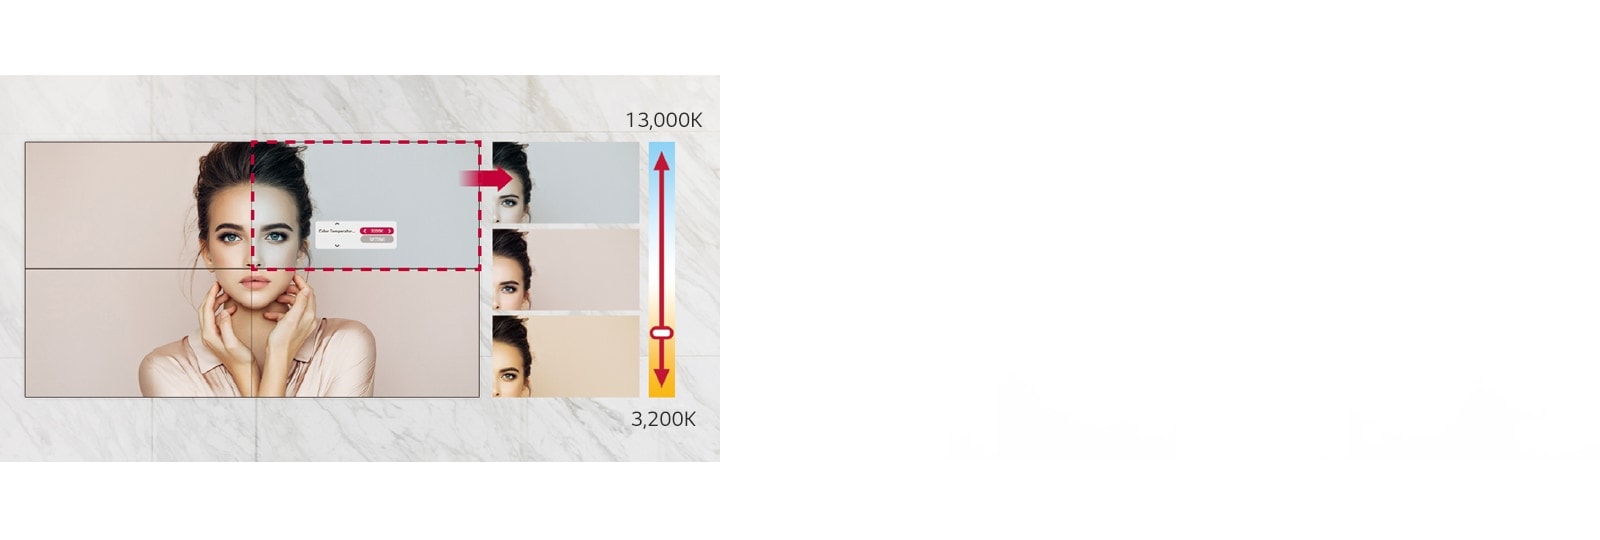 VH7J-H 可以 100K 的間隔調整介於 3,200K 到 13,000K 的色溫。